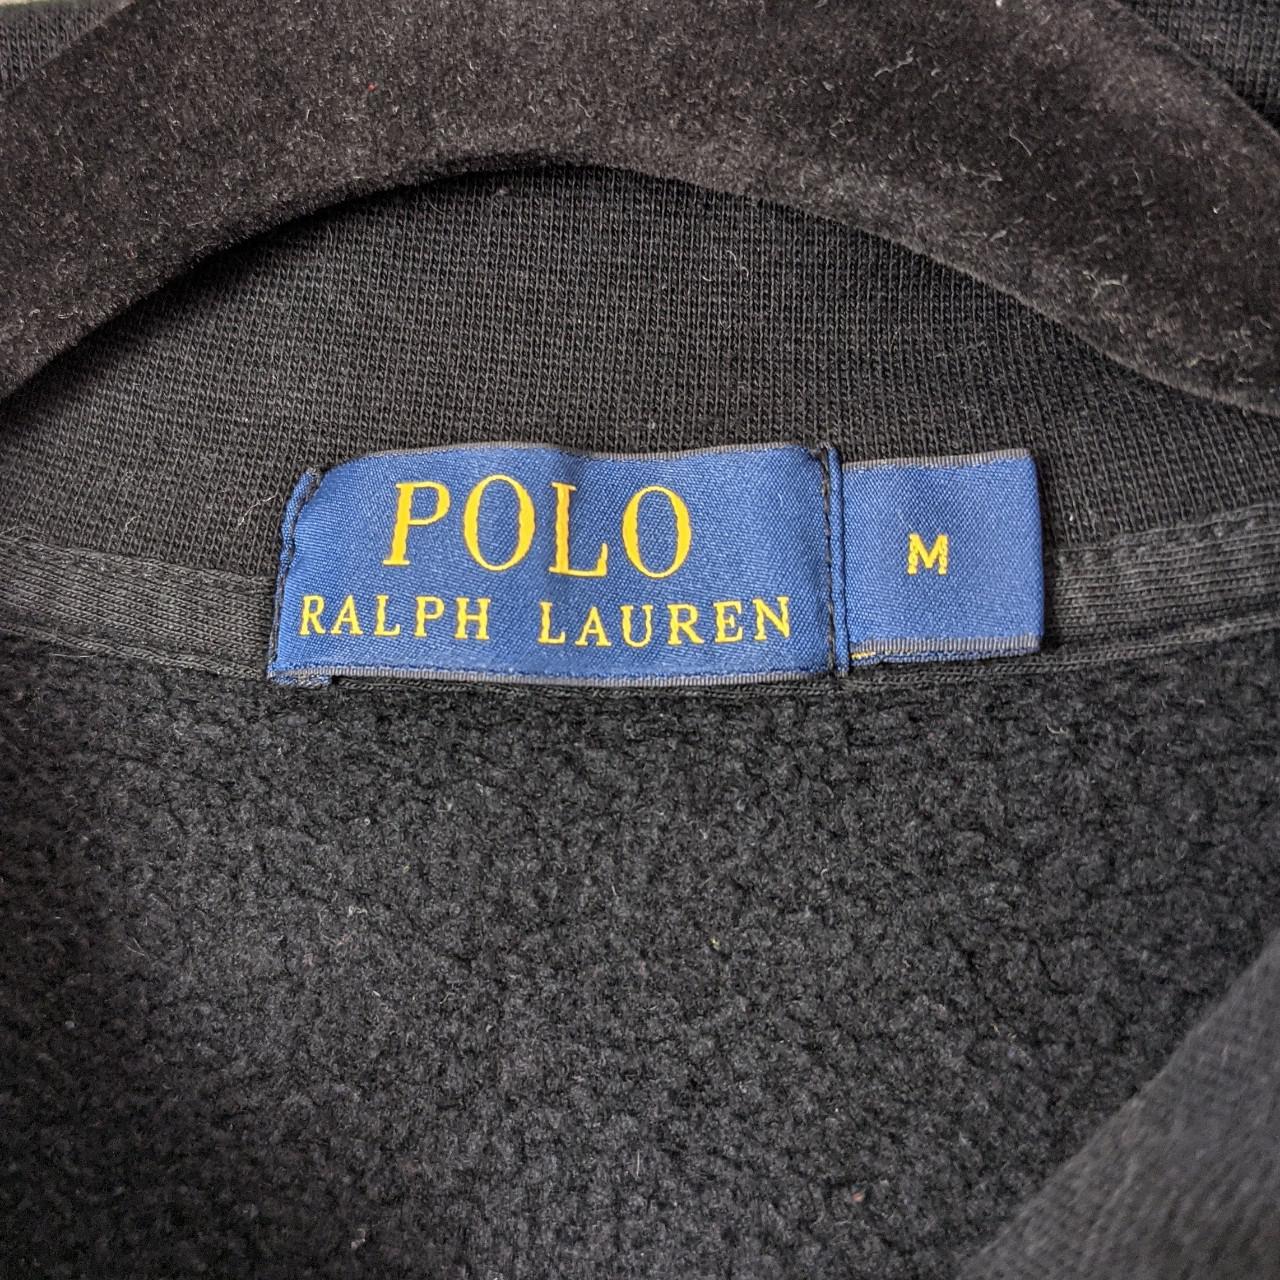 Ralph Lauren Track Jacket in Black with white... - Depop